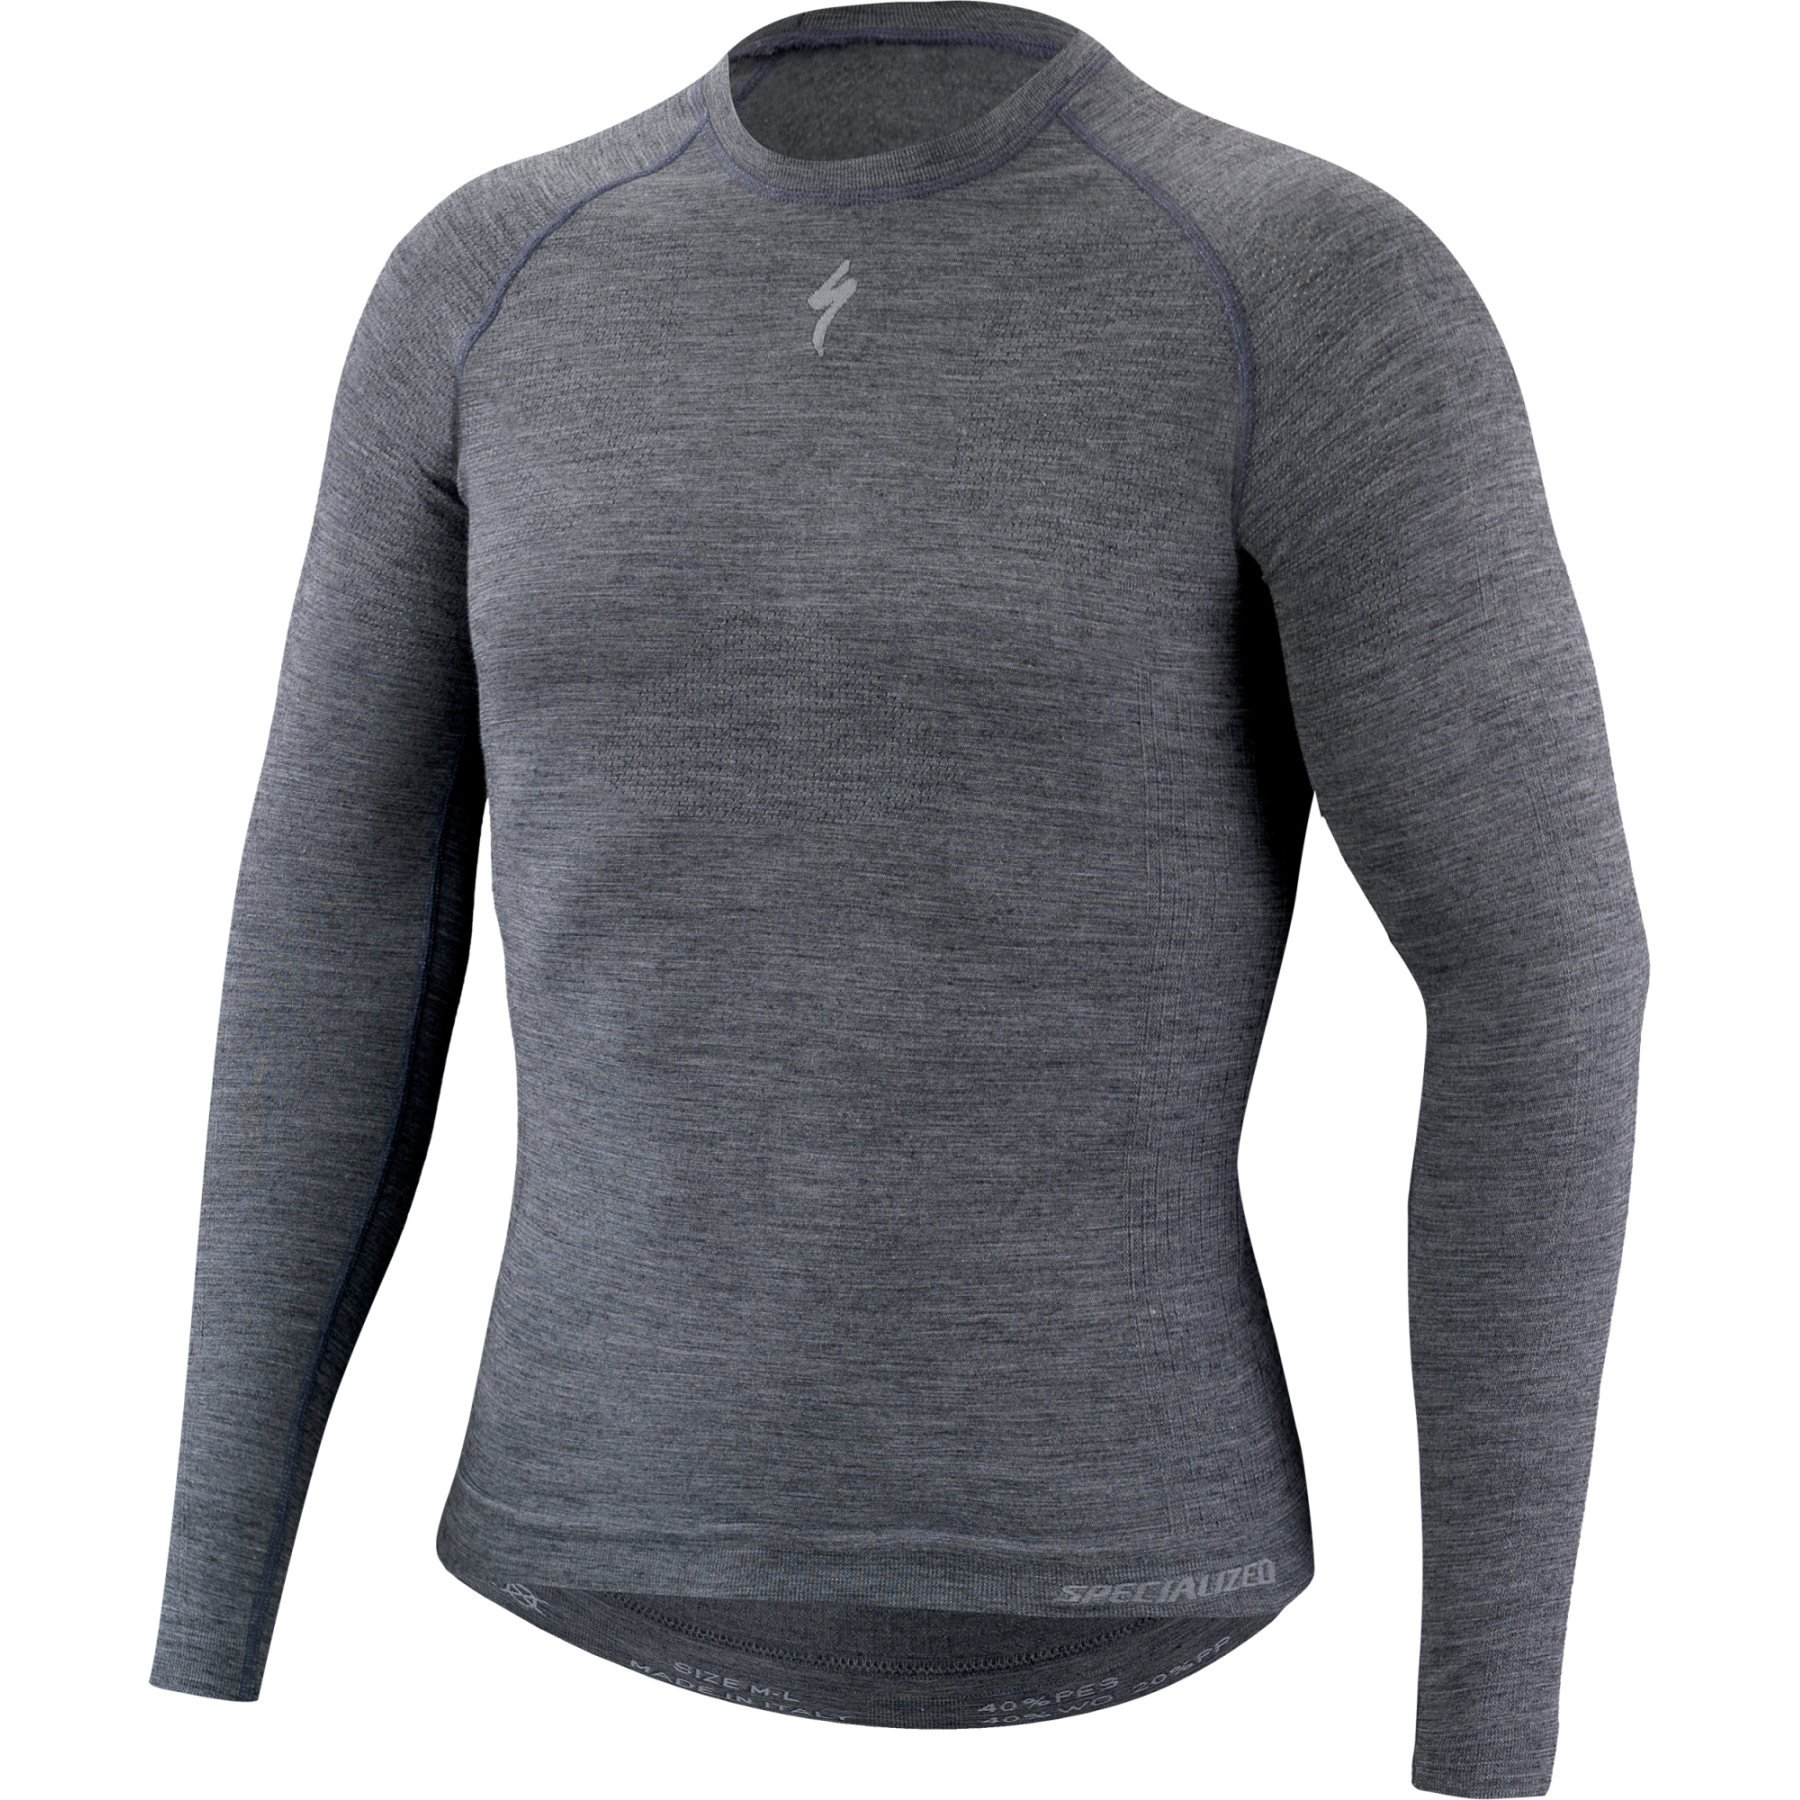 Productfoto van Specialized Seamless Merino Baselayer Longsleeve Shirt - grey